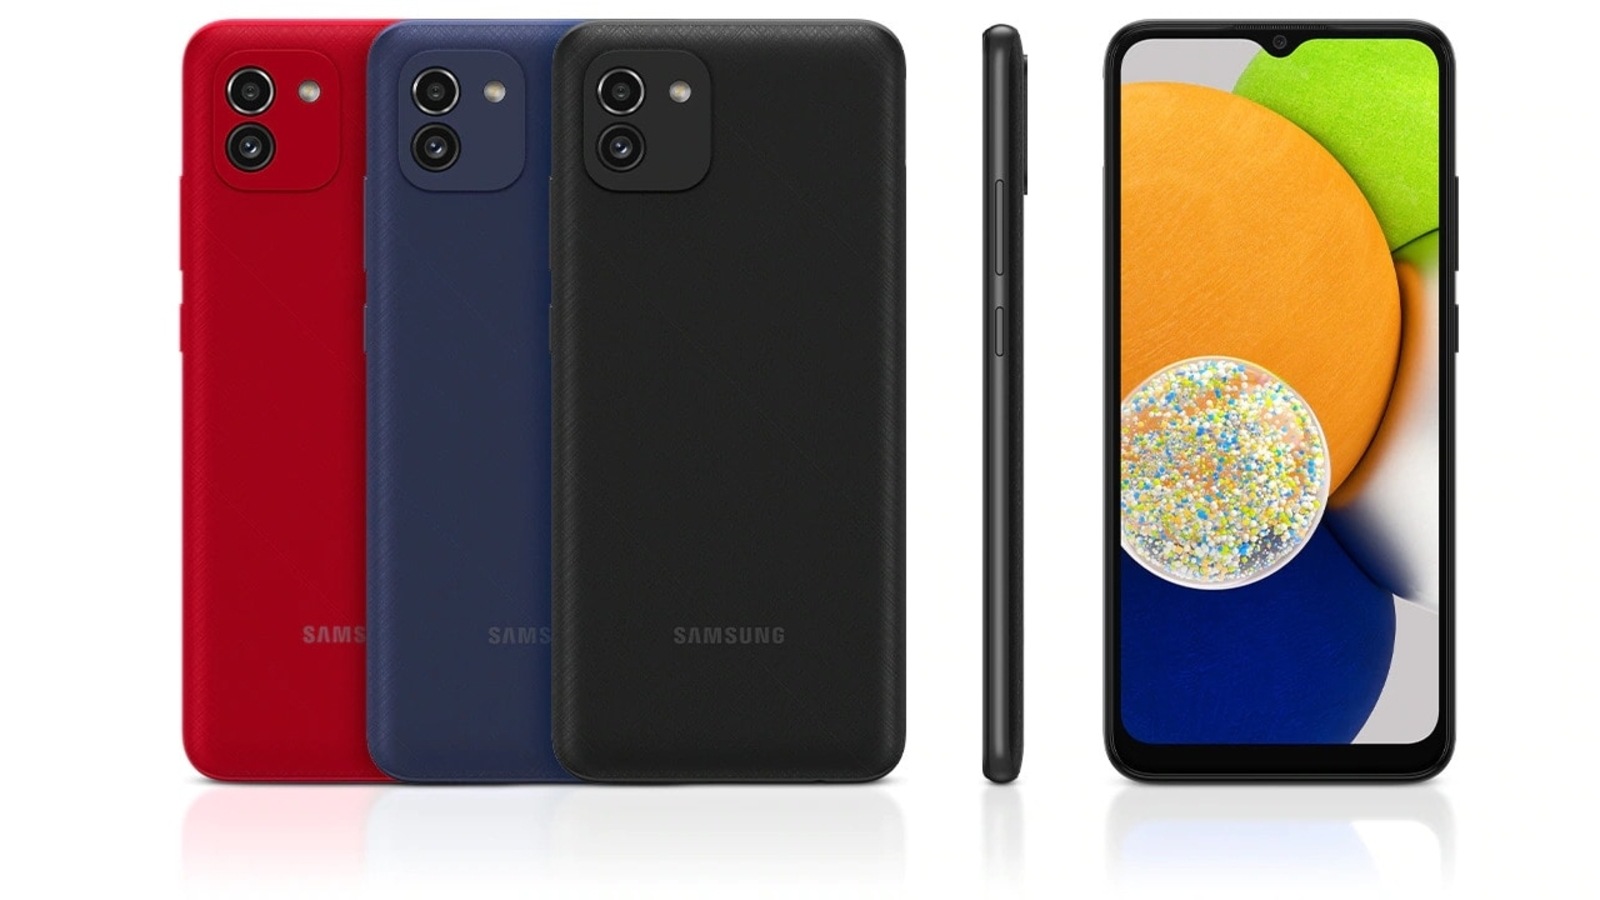 Take a sneak peek at Samsung Galaxy A03 price ahead of launch